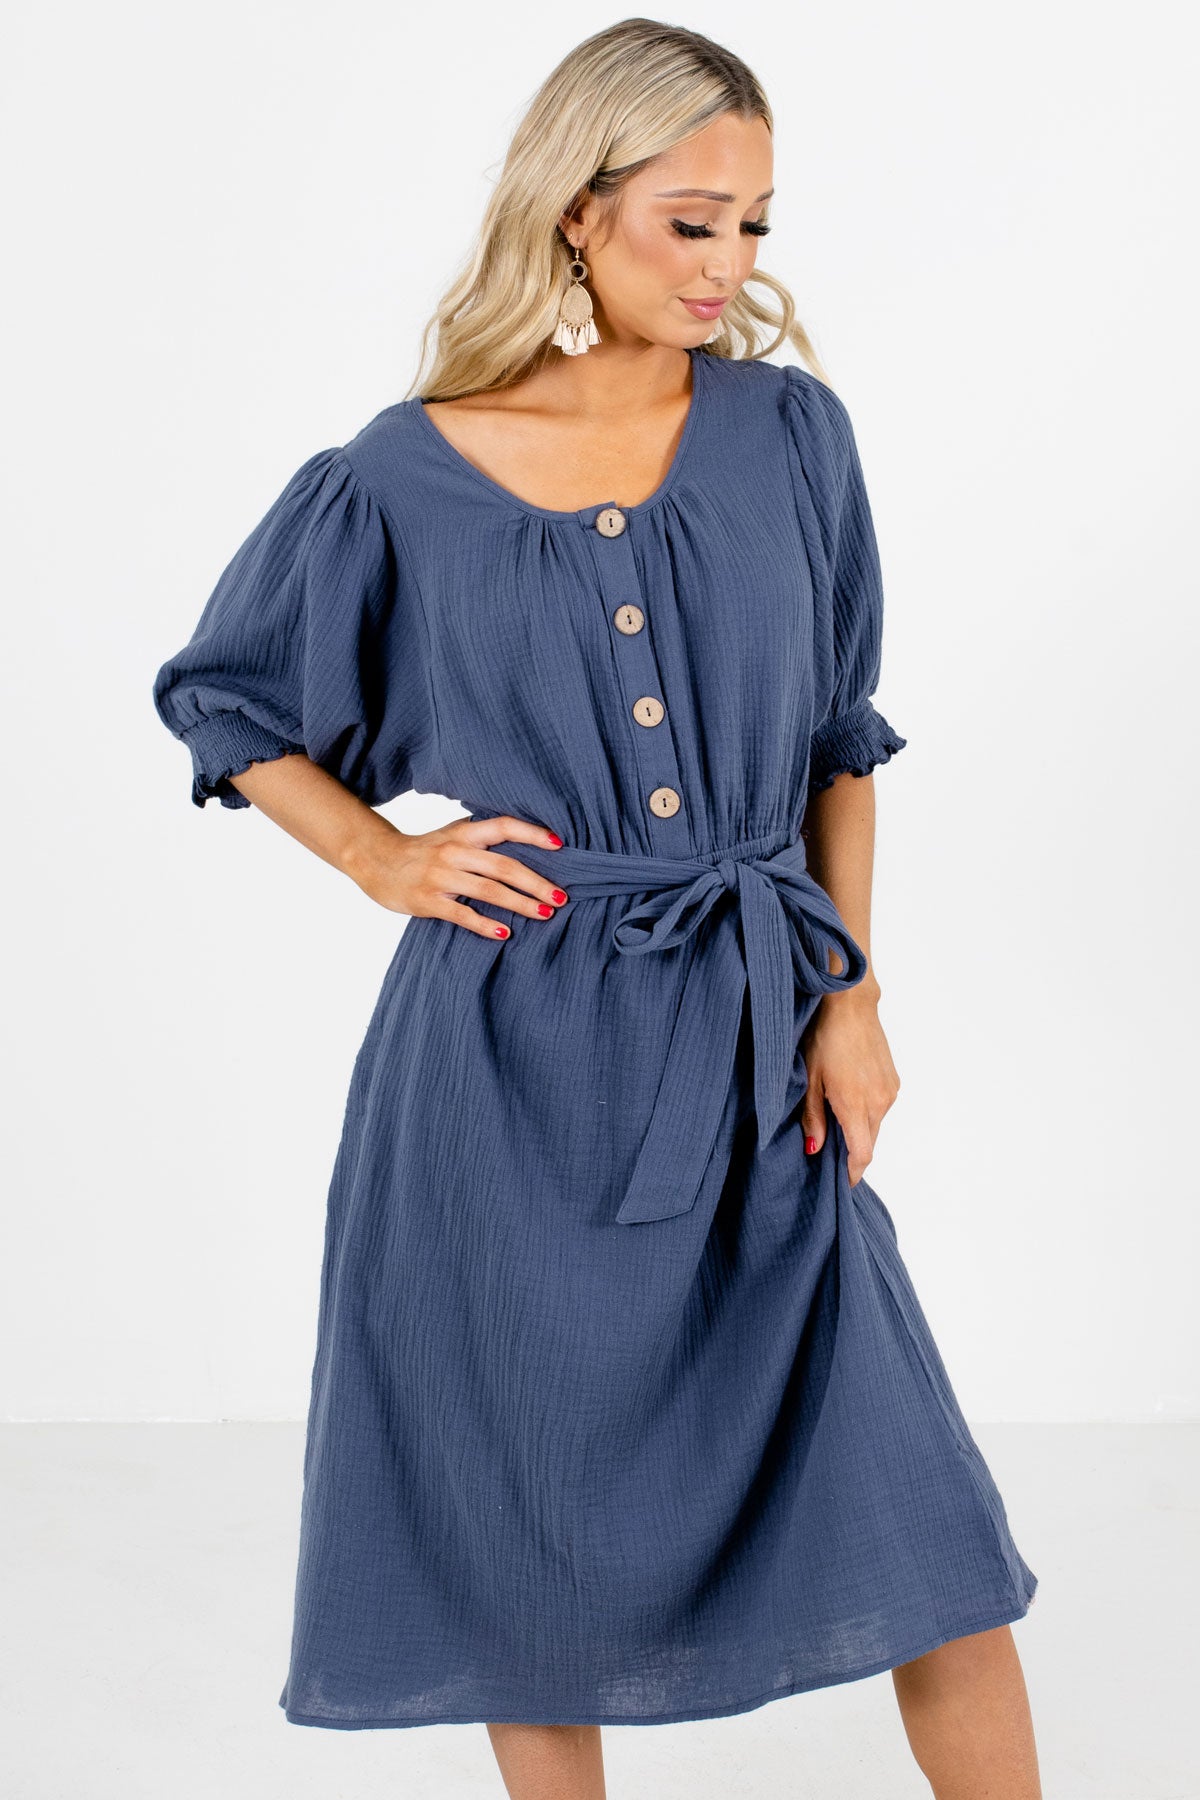 Blue Button-Up Bodice Boutique Knee-Length Dresses for Women